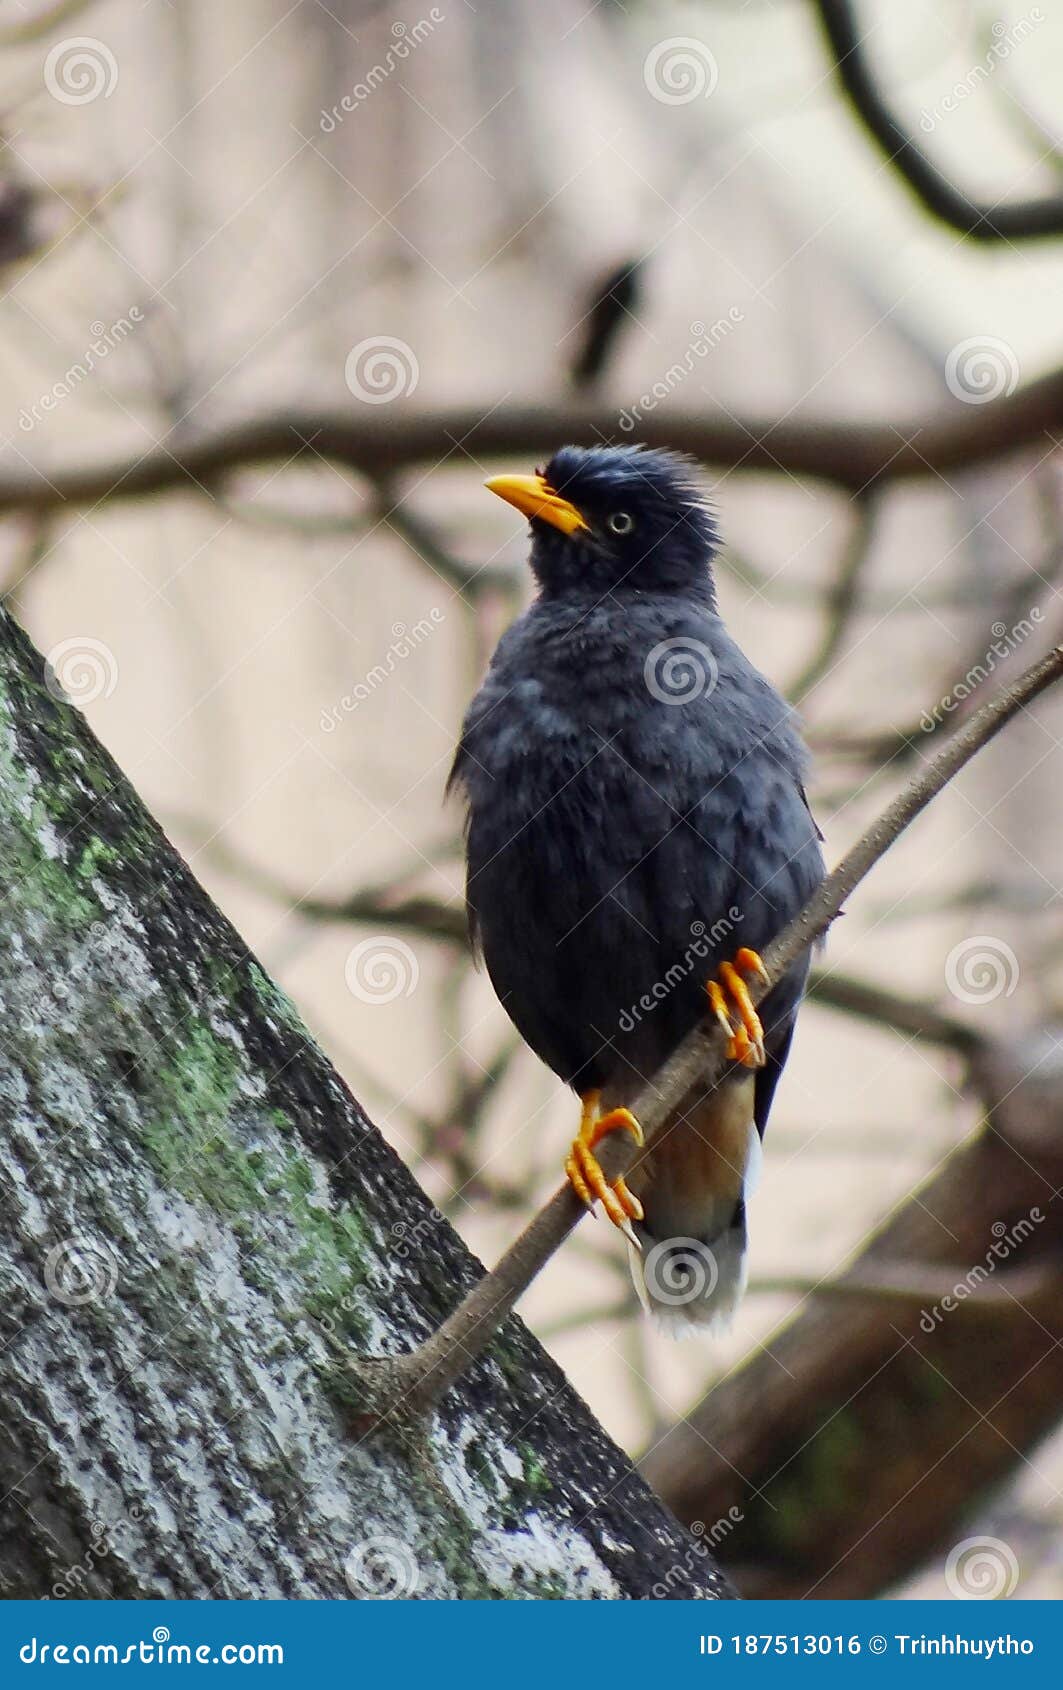 Bird in the daily life stock photo. Image of blackbird - 187513016